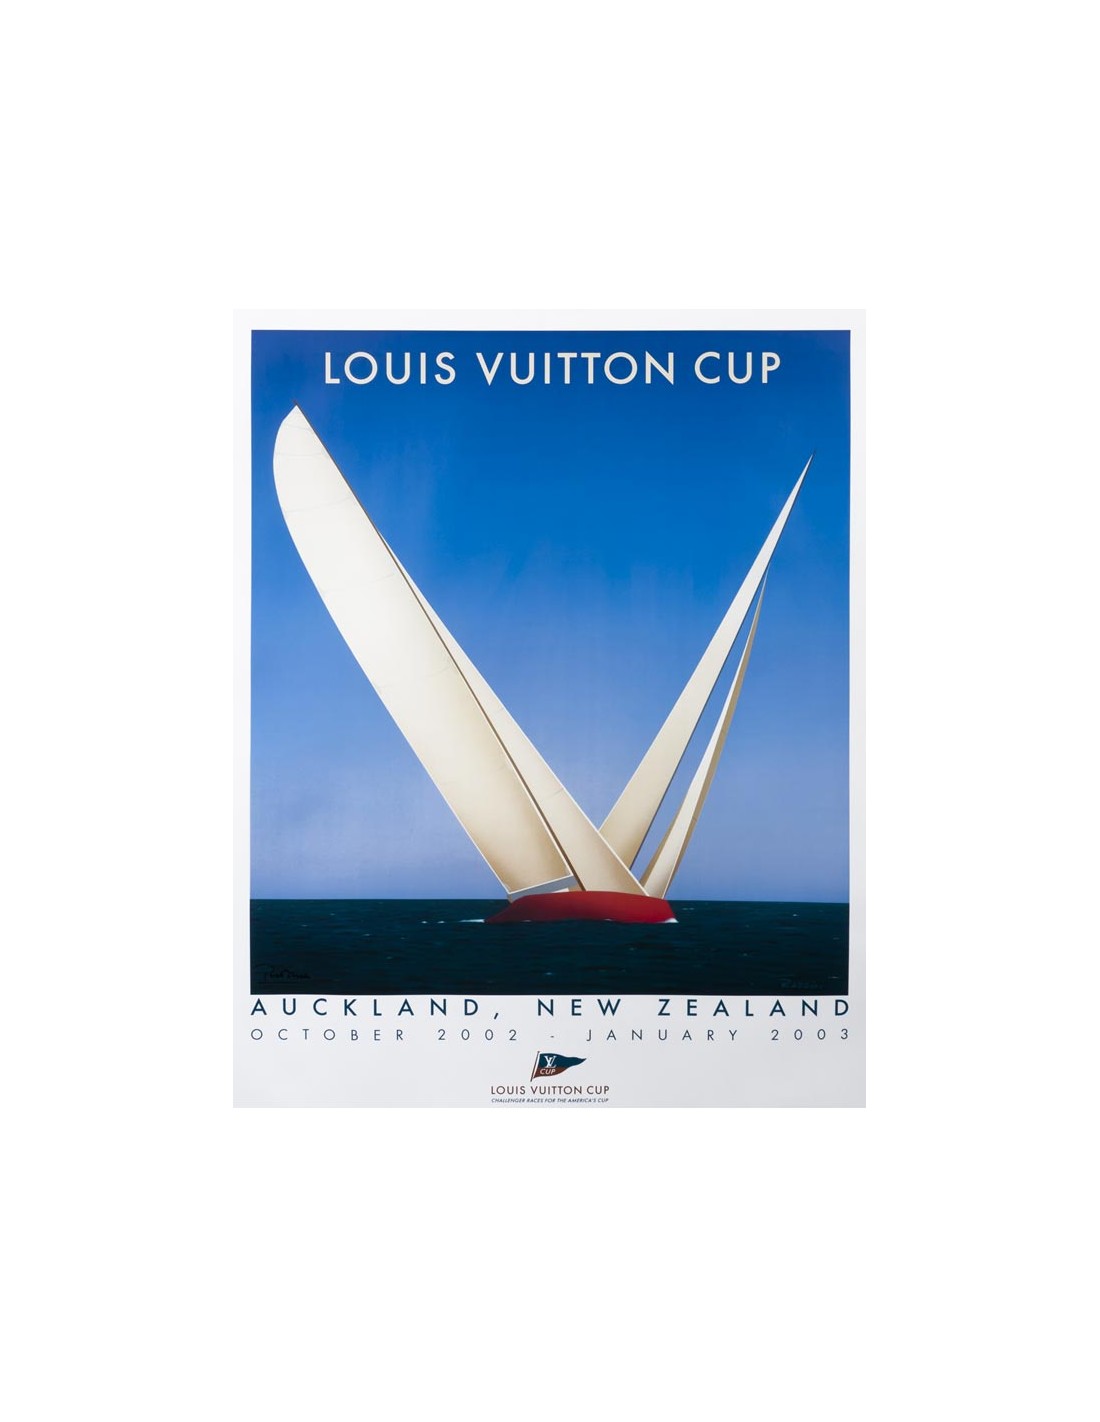 LV CUP AUCKLAND RAZZIA SAILING 2003 ORIGINALHAND  SIGNED SMALL 